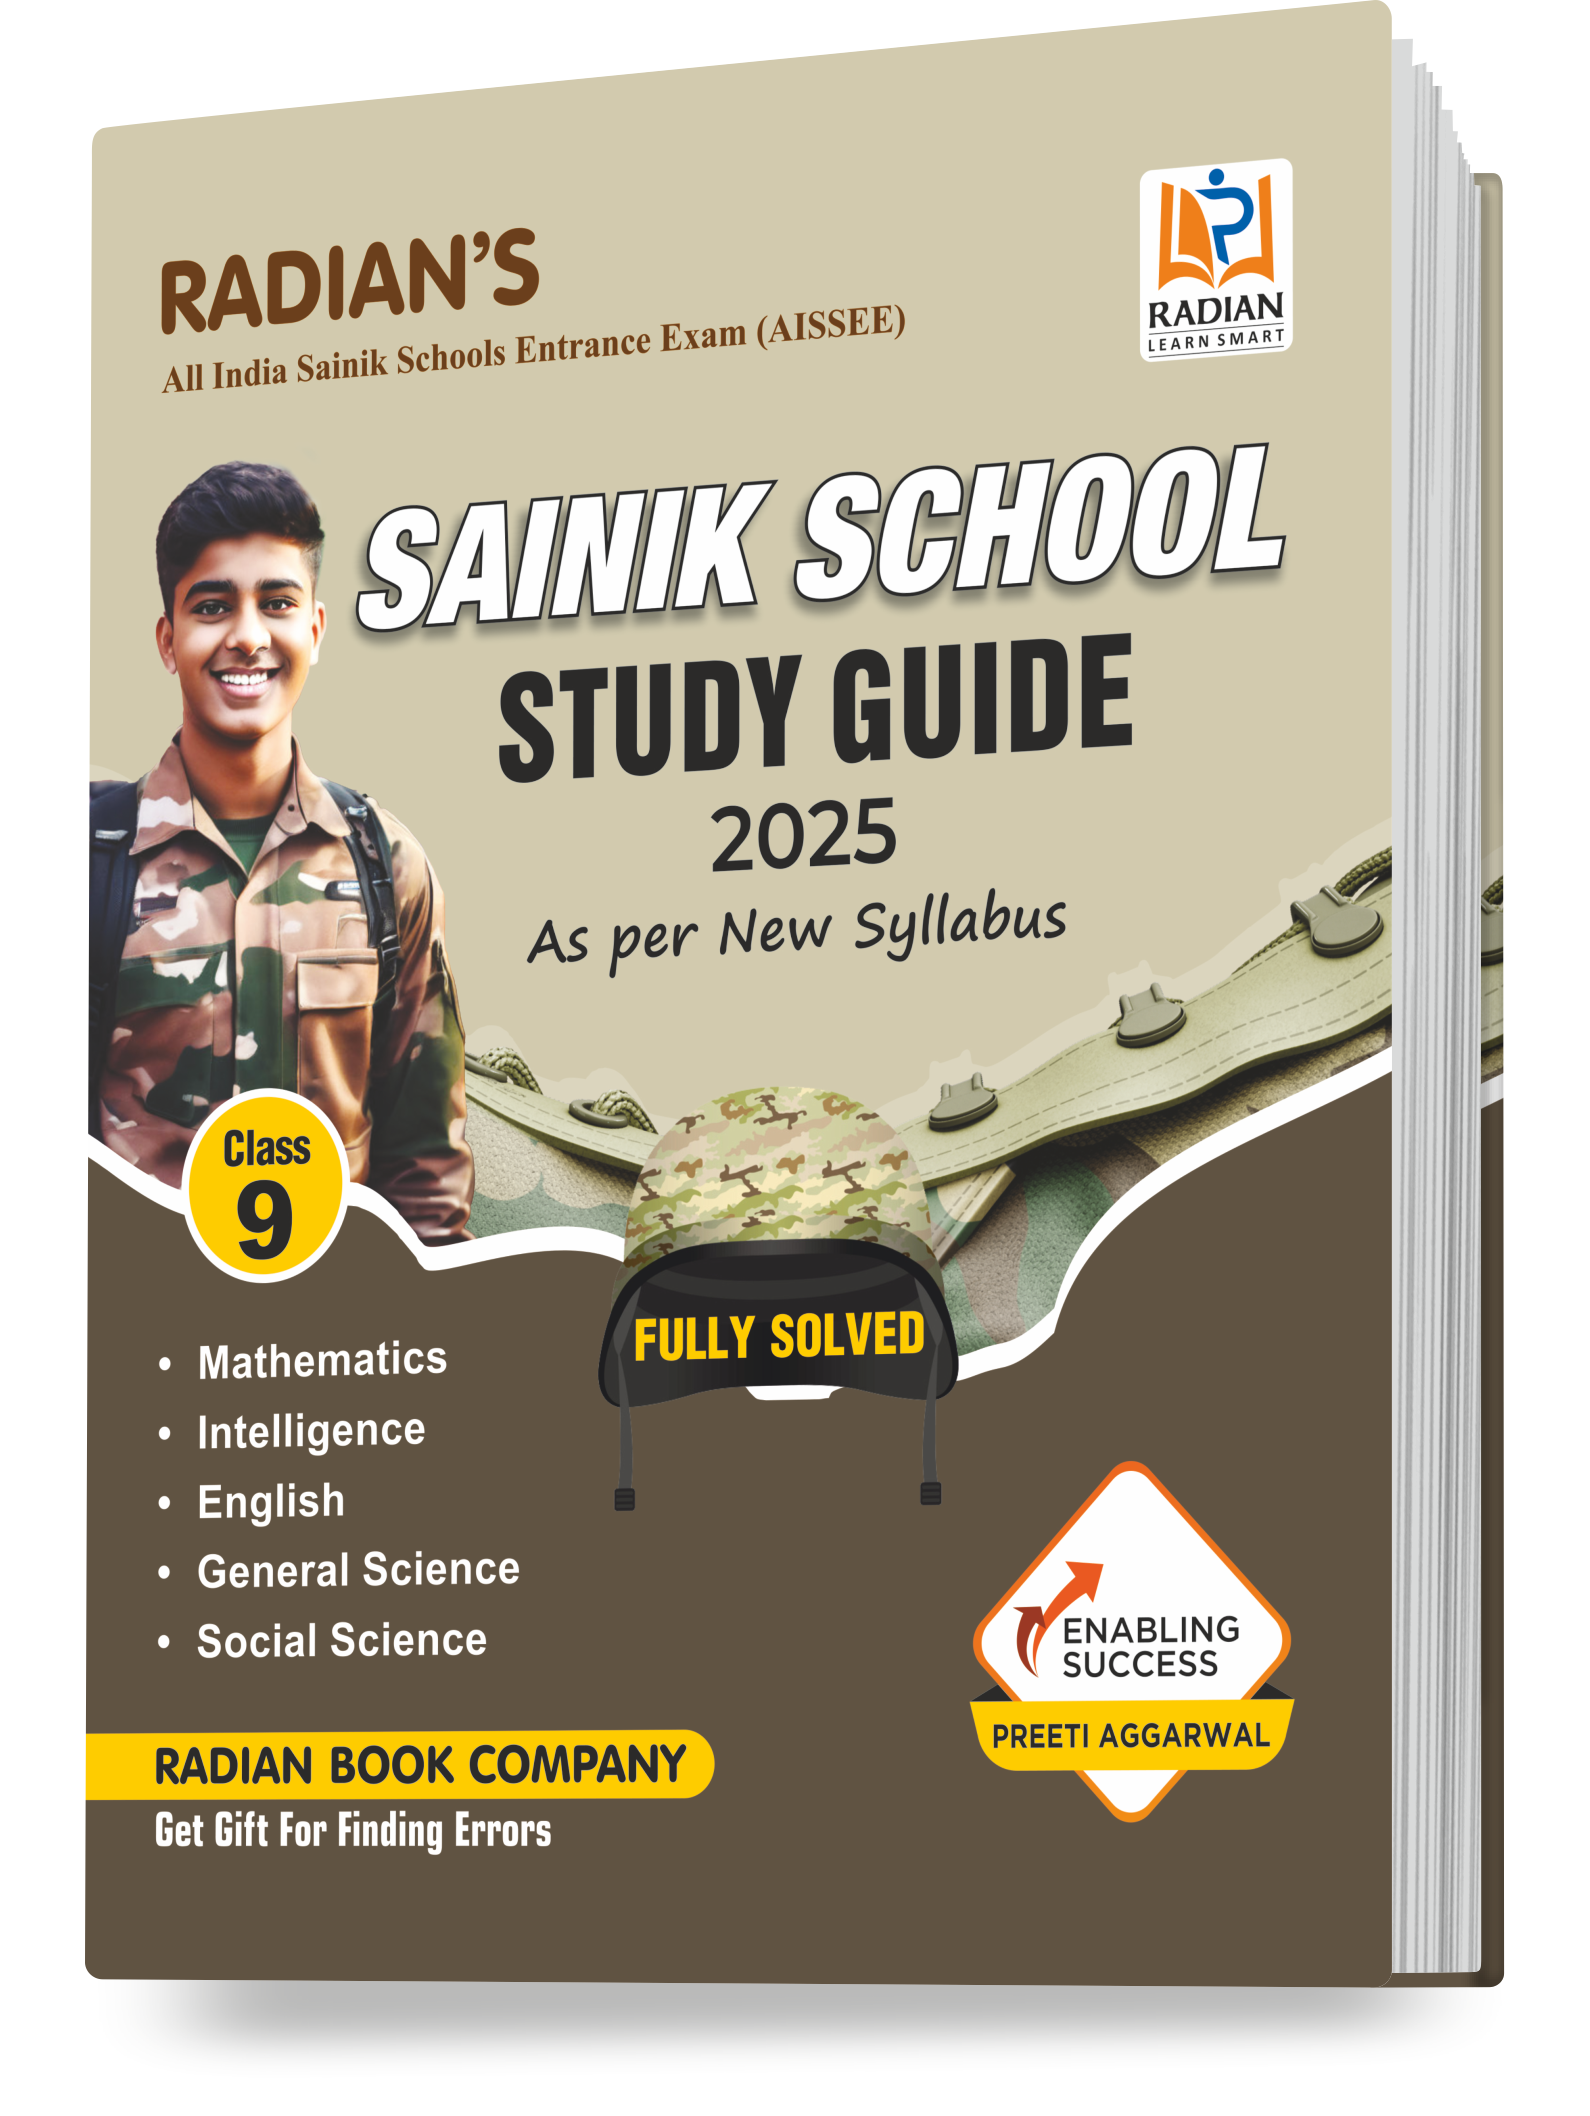 Sainik School Class 9 Complete Study Guide Book 2025 for All India Sainik Schools entrance exam (AISSEE) in English.